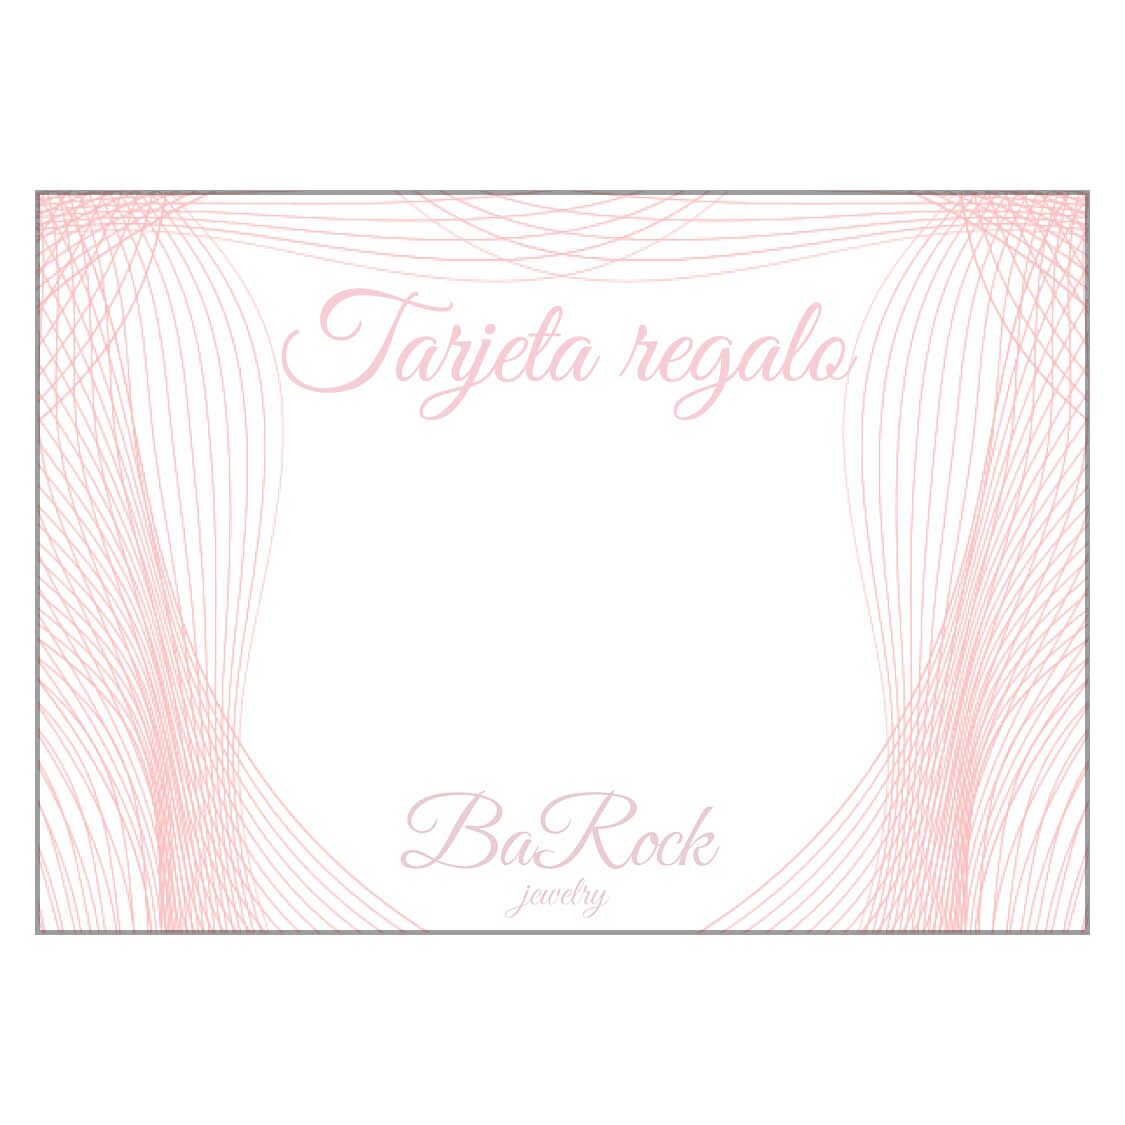 tarjeta regalo BaRock jewelry en rosa sobre fondo blanco